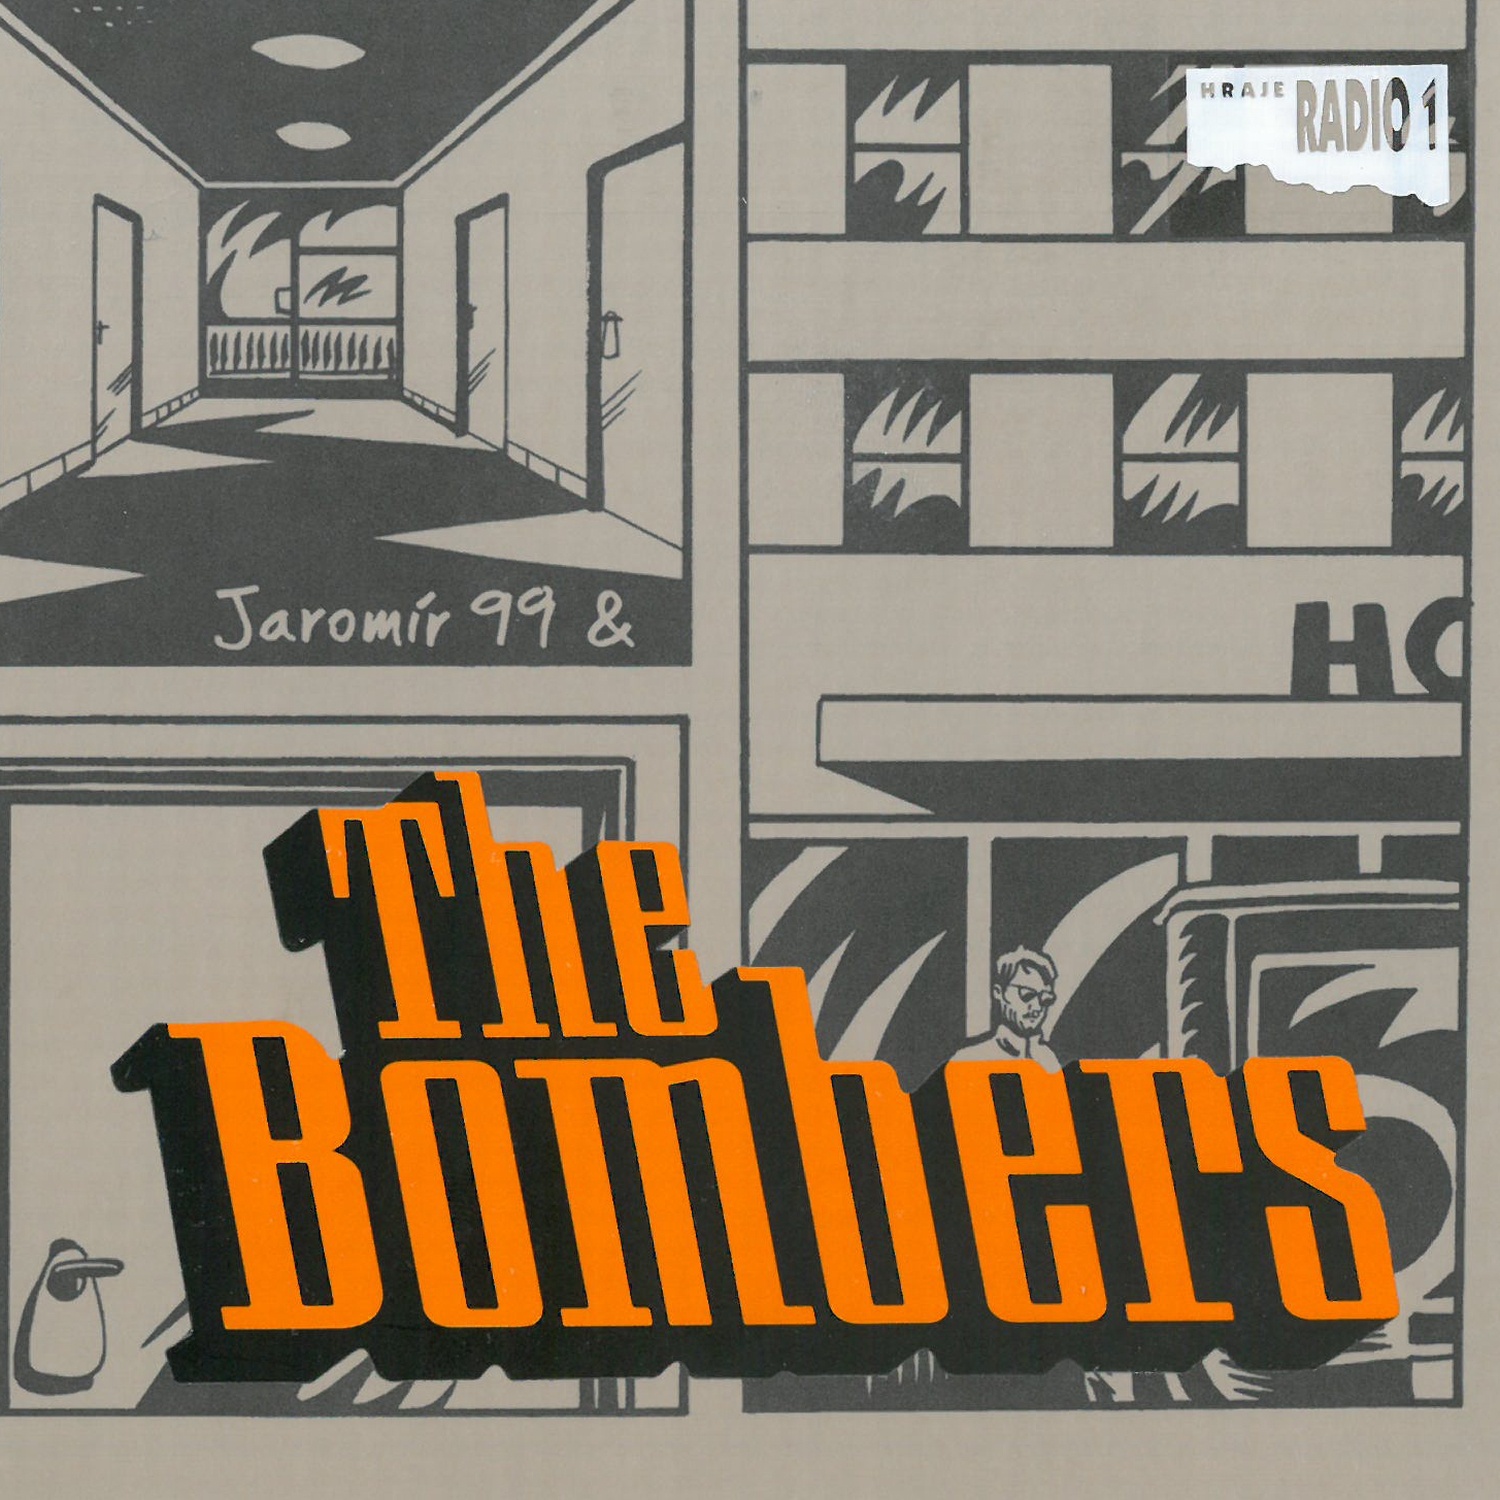 CD Shop - JAROMIR 99 & THE BOMBERS 